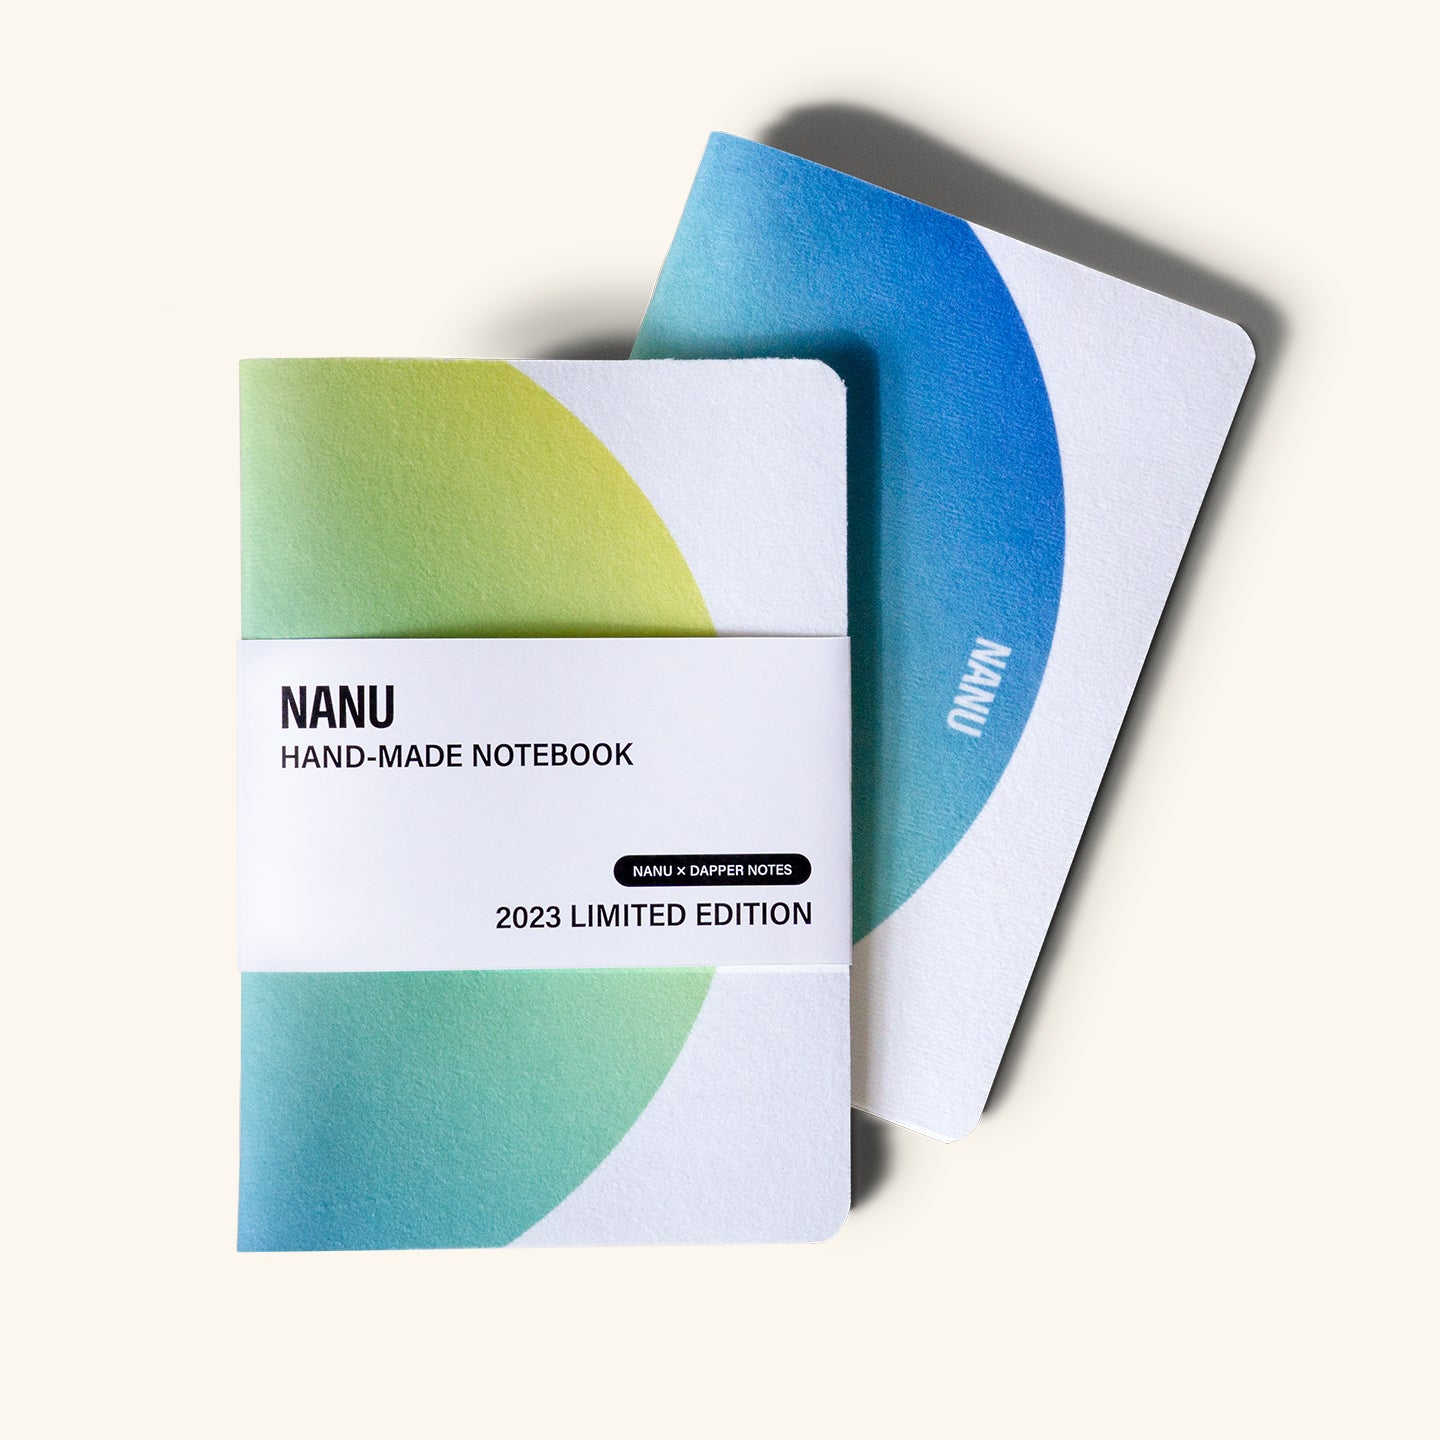 Nanu Handmade Notebook by Dapper Notes